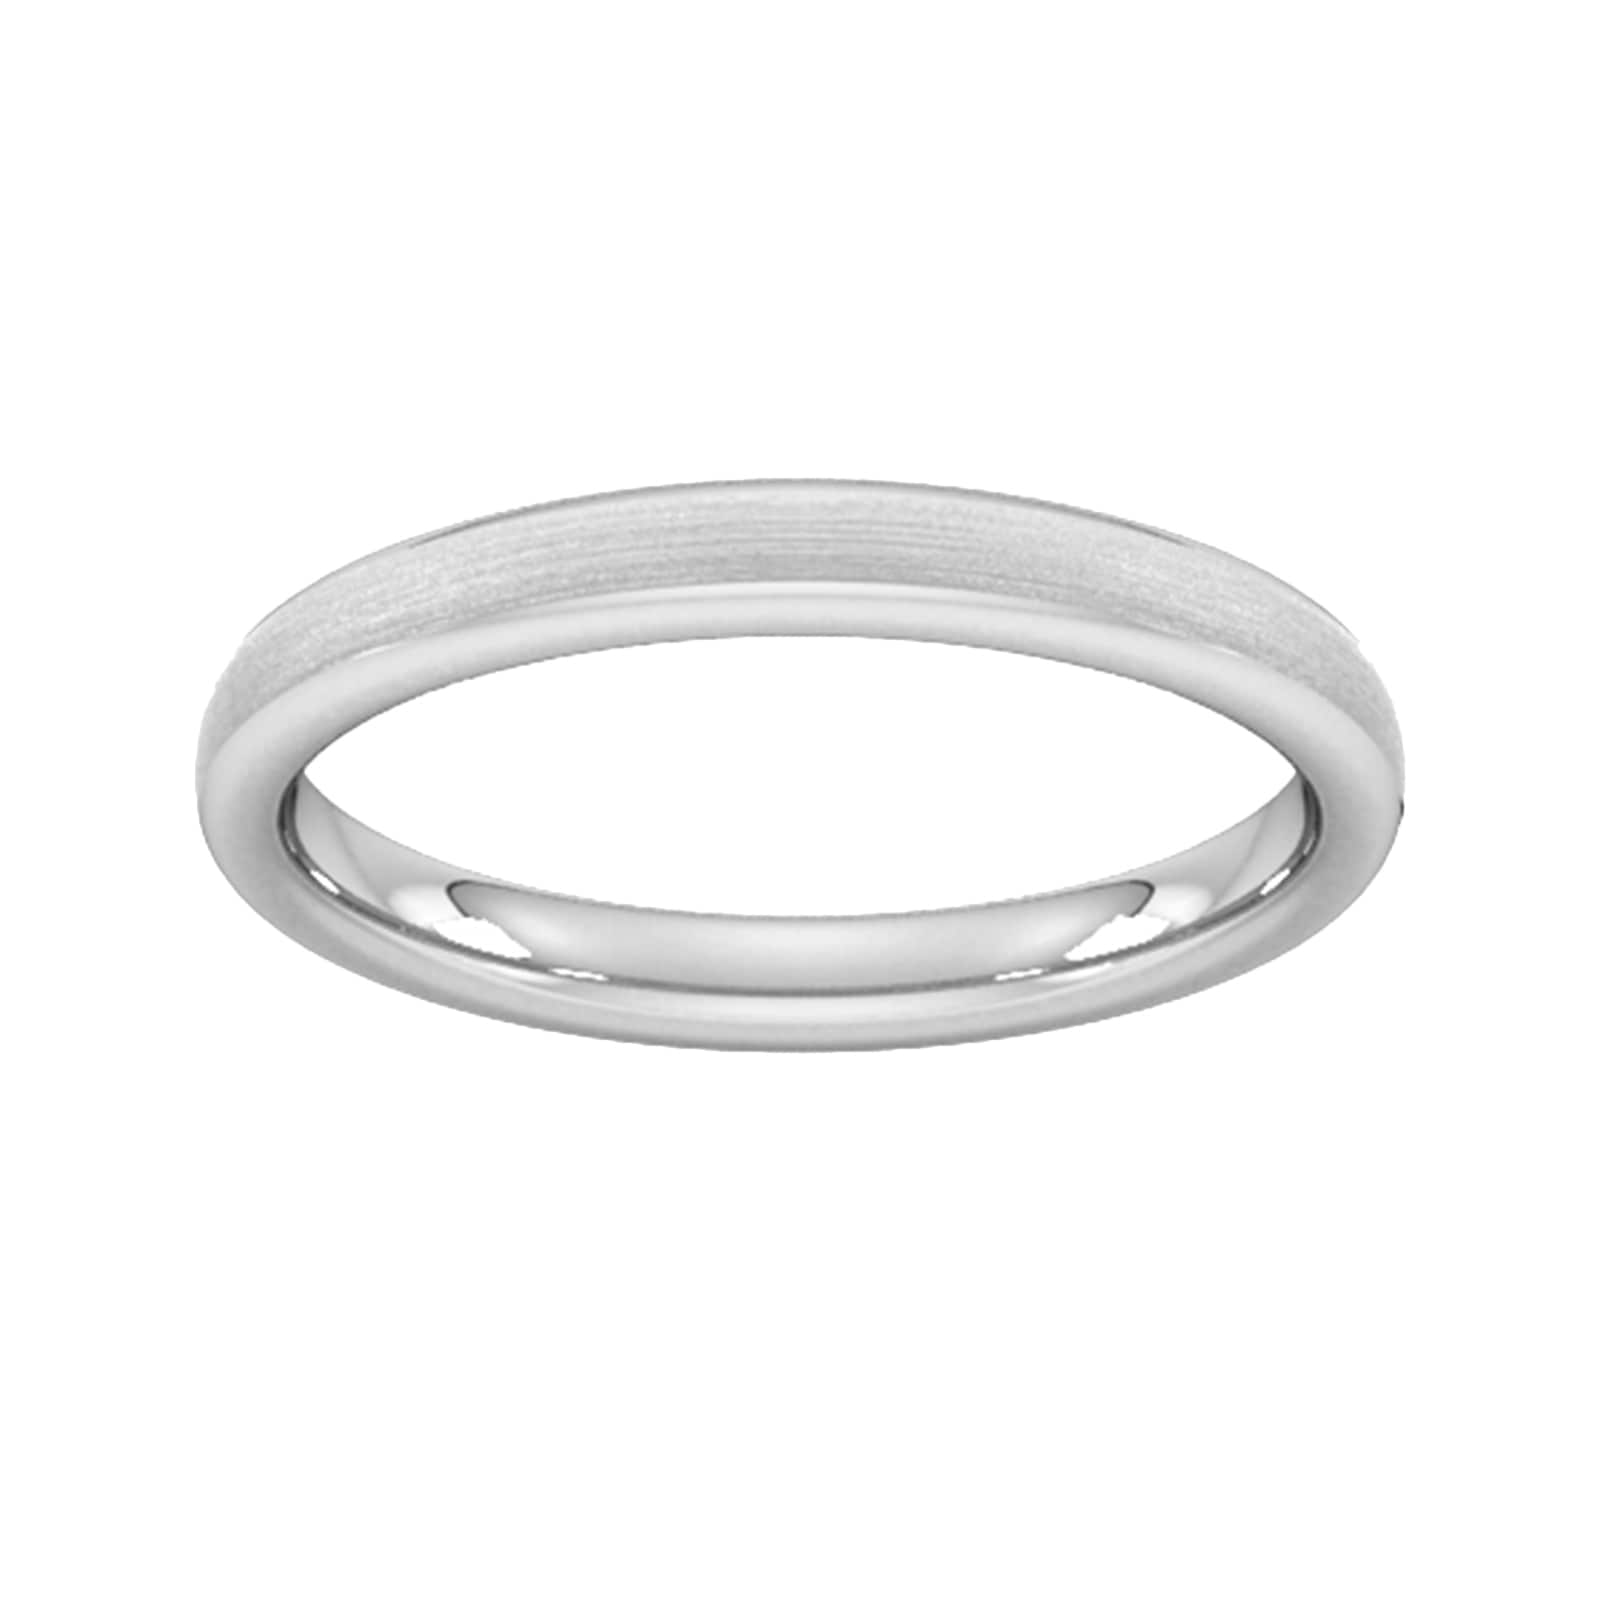 2.5mm Slight Court Standard Matt Finished Wedding Ring In 950 Palladium - Ring Size U